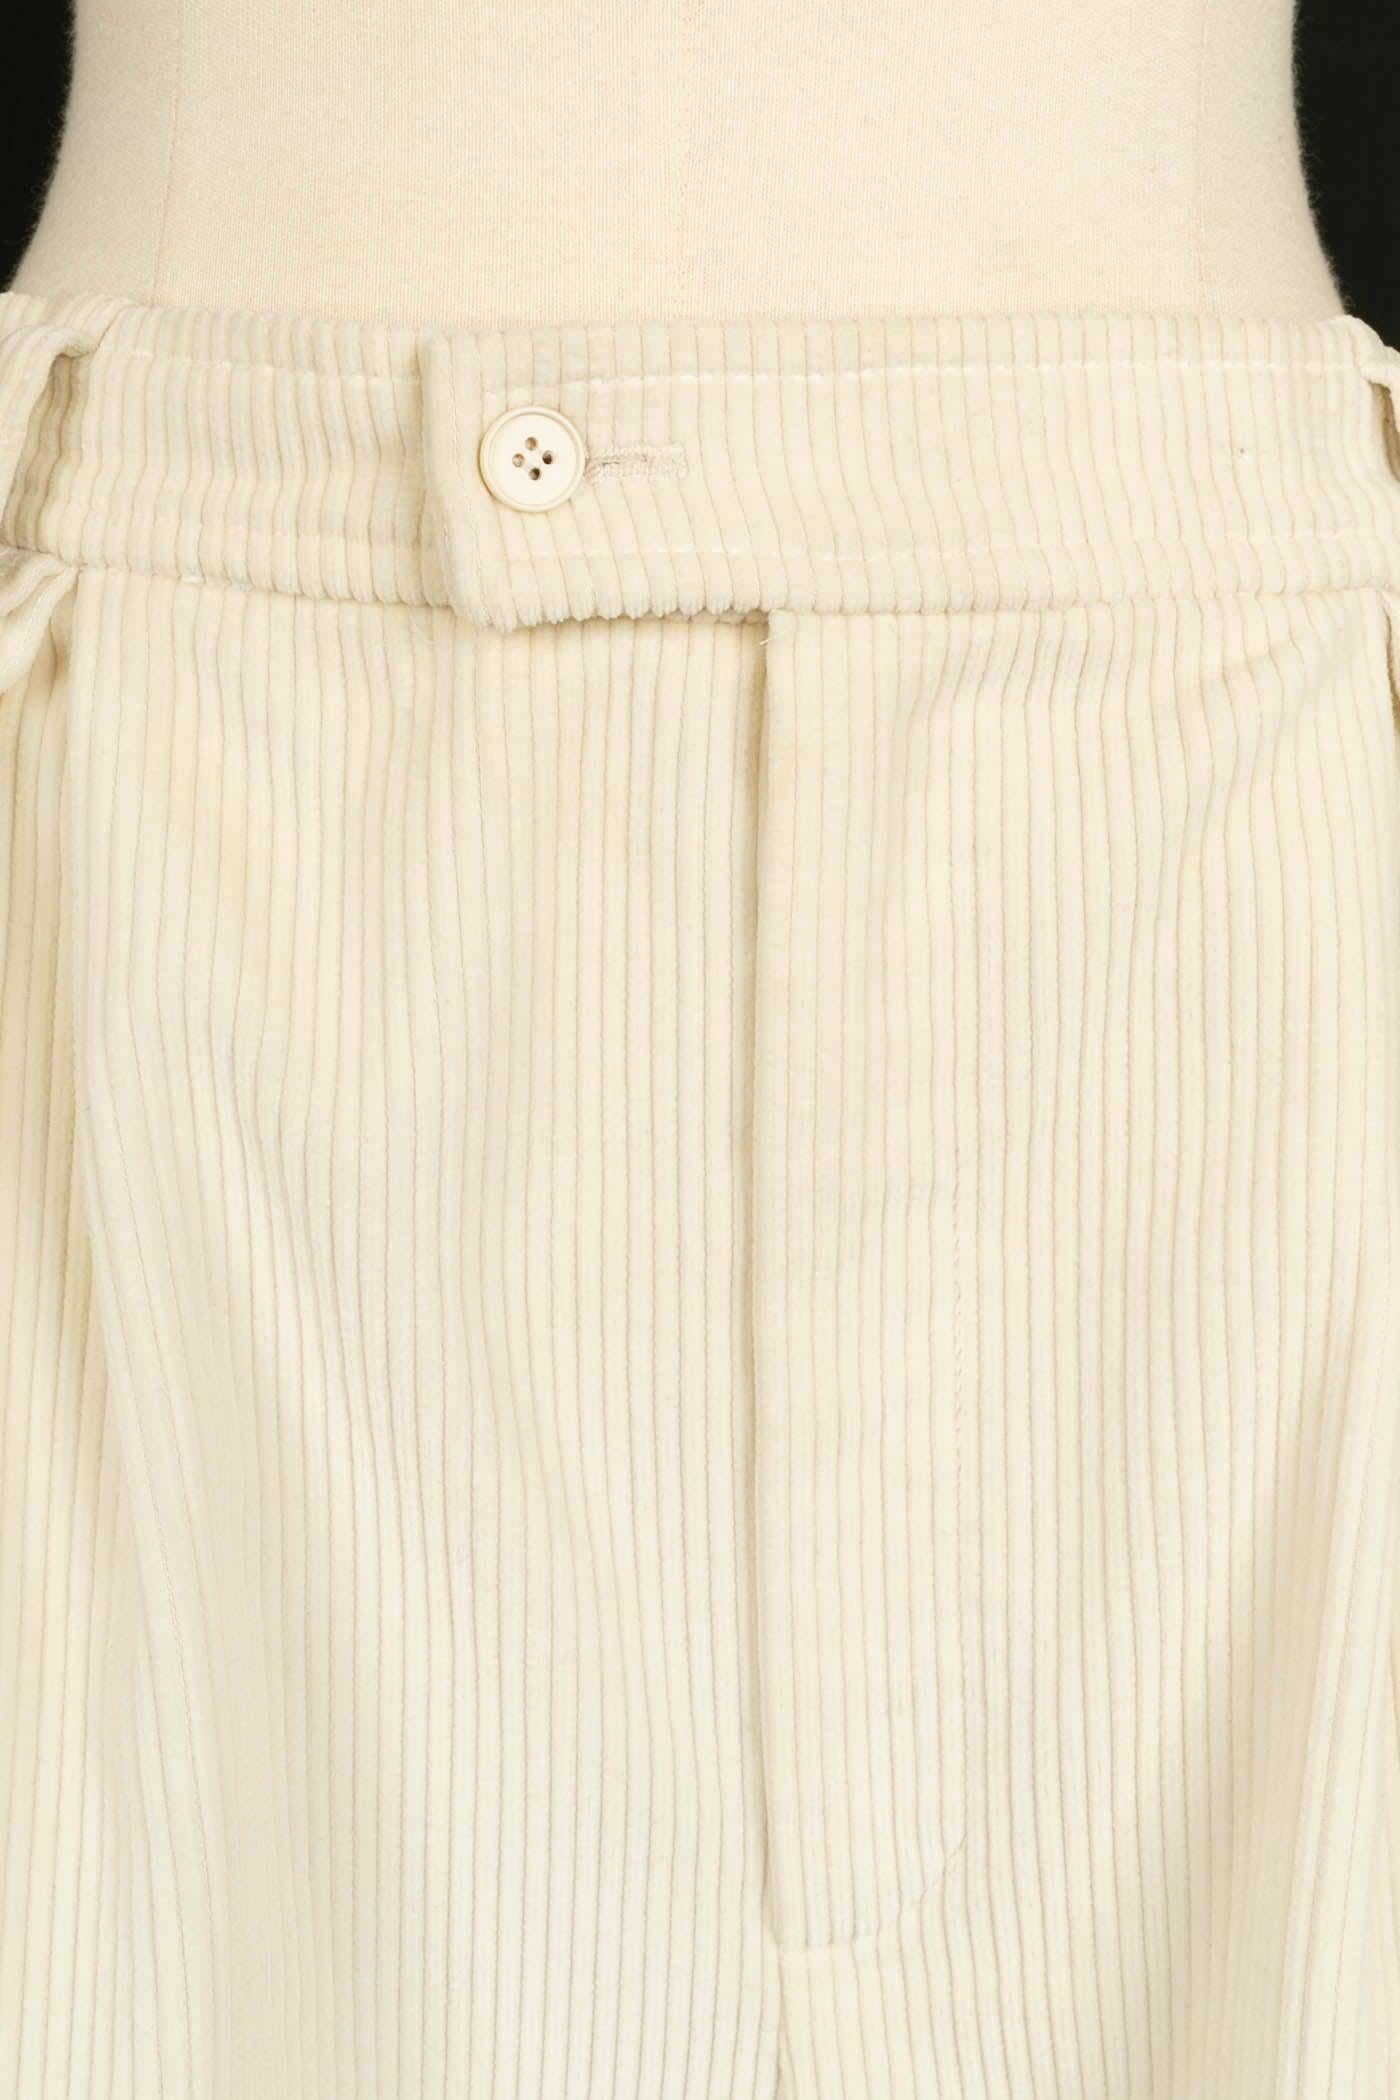 Yves Saint Laurent Off White Corduroy Pants, Size 36FR 2